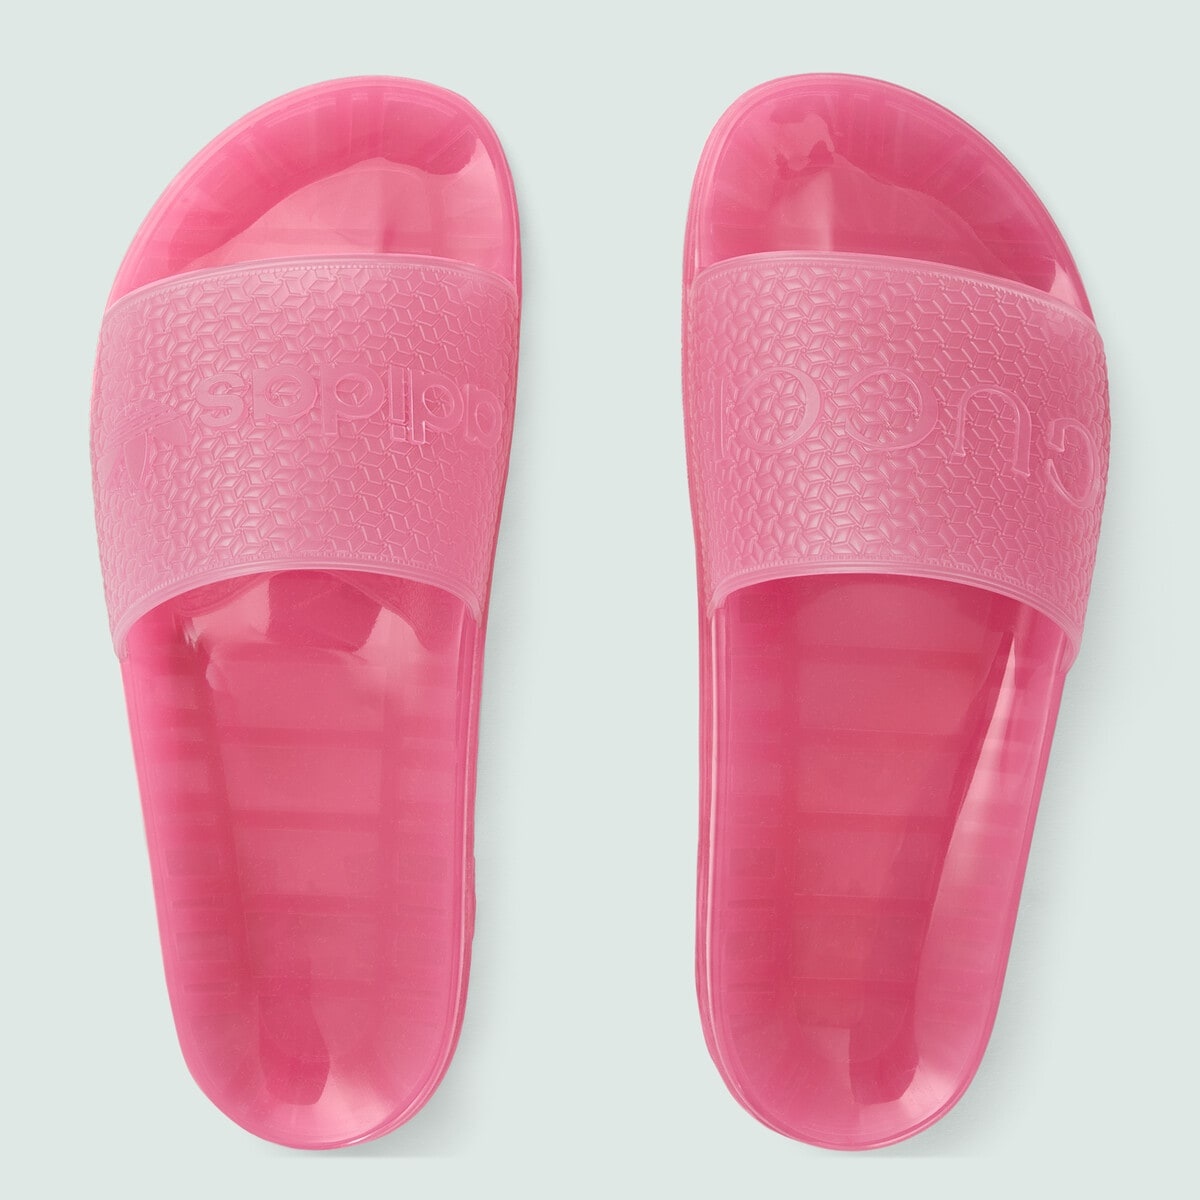 adidas x Gucci women's rubber slide sandal - 6